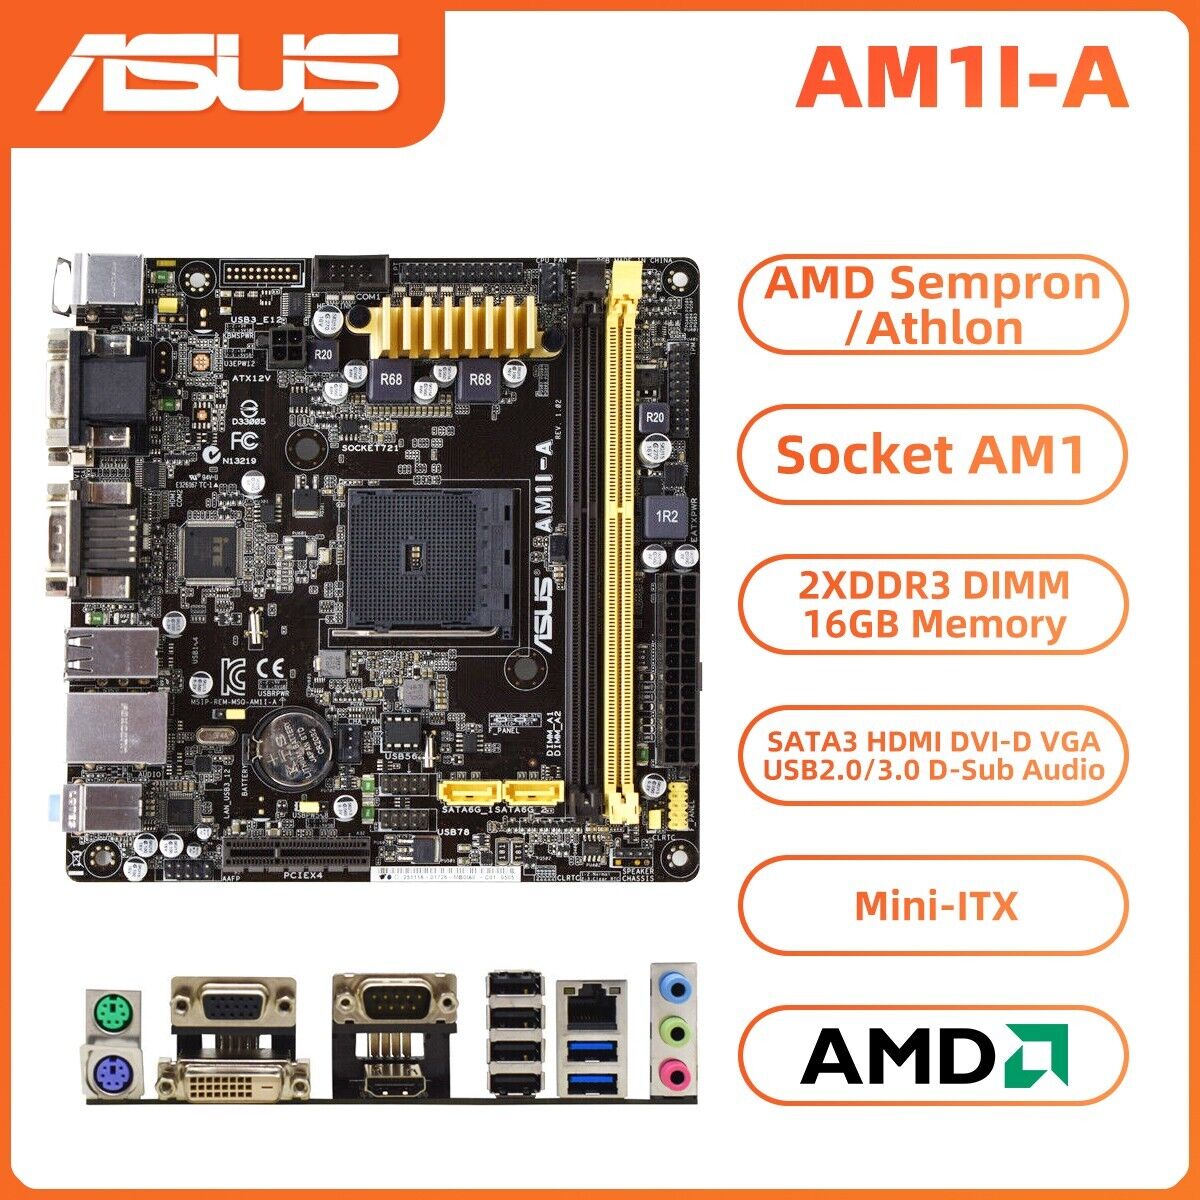 ASUS AM1I-A Motherboard Mini-ITX AMD Sempron/Athlon AM1 DDR3 SATA3 HDMI VGA+I/O